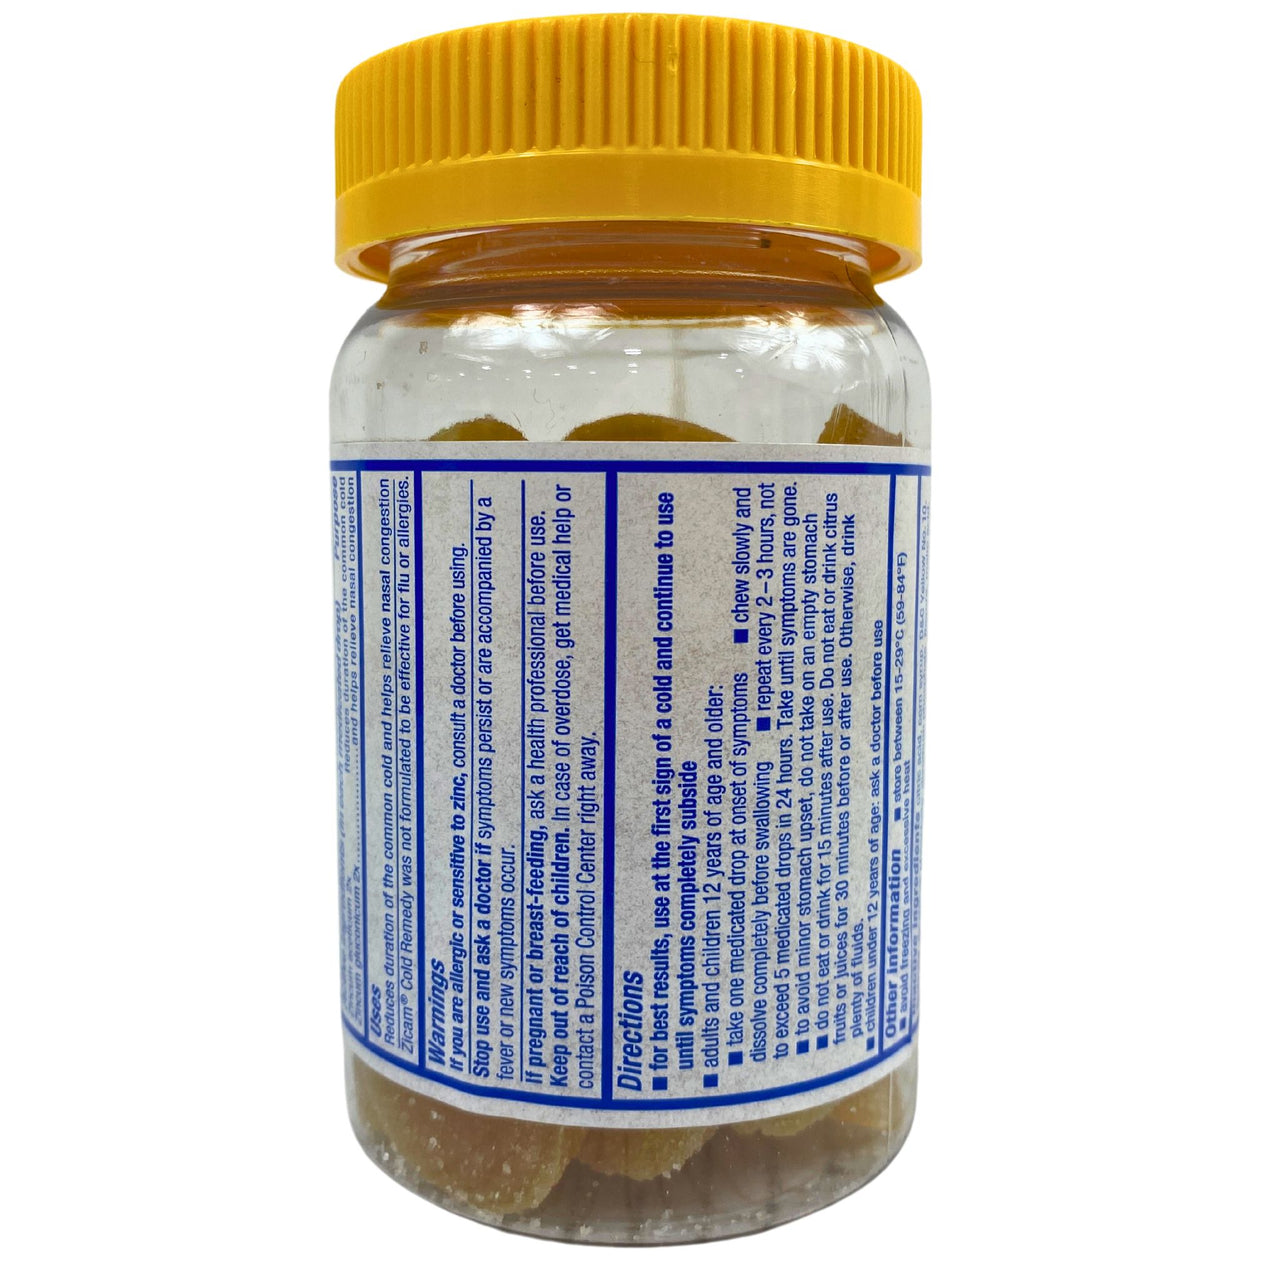 Zicam Cold Remedy Real Manuka Honey Medicated Fruit Drops